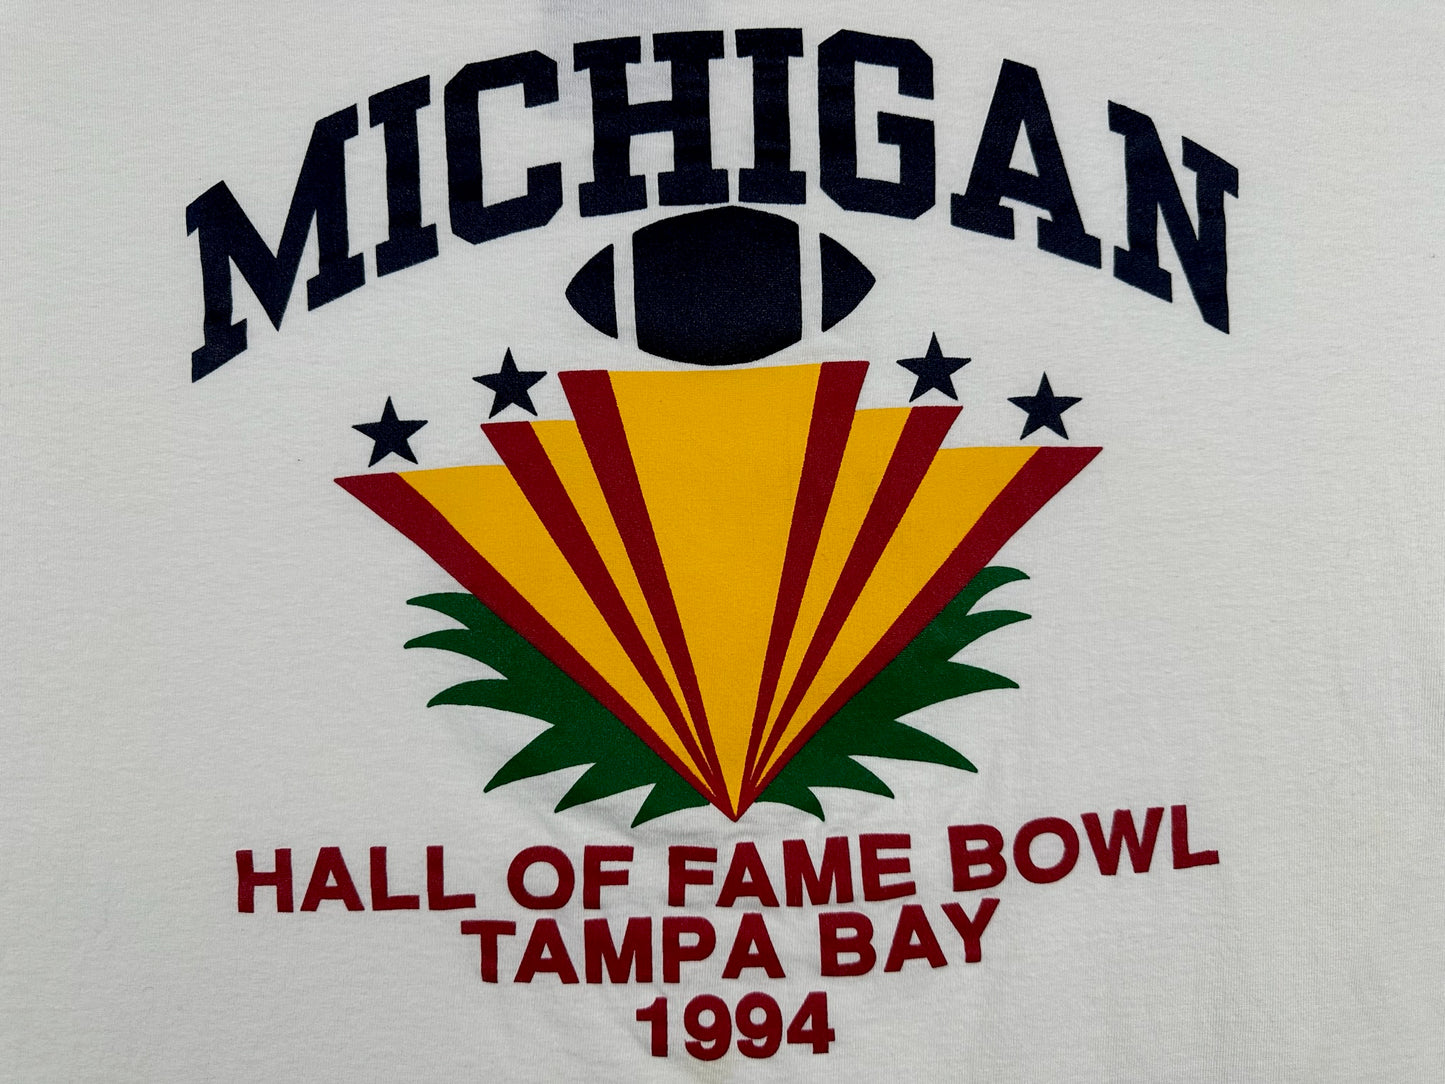 Michigan 94 Hall of Fam Bowl T-Shirt